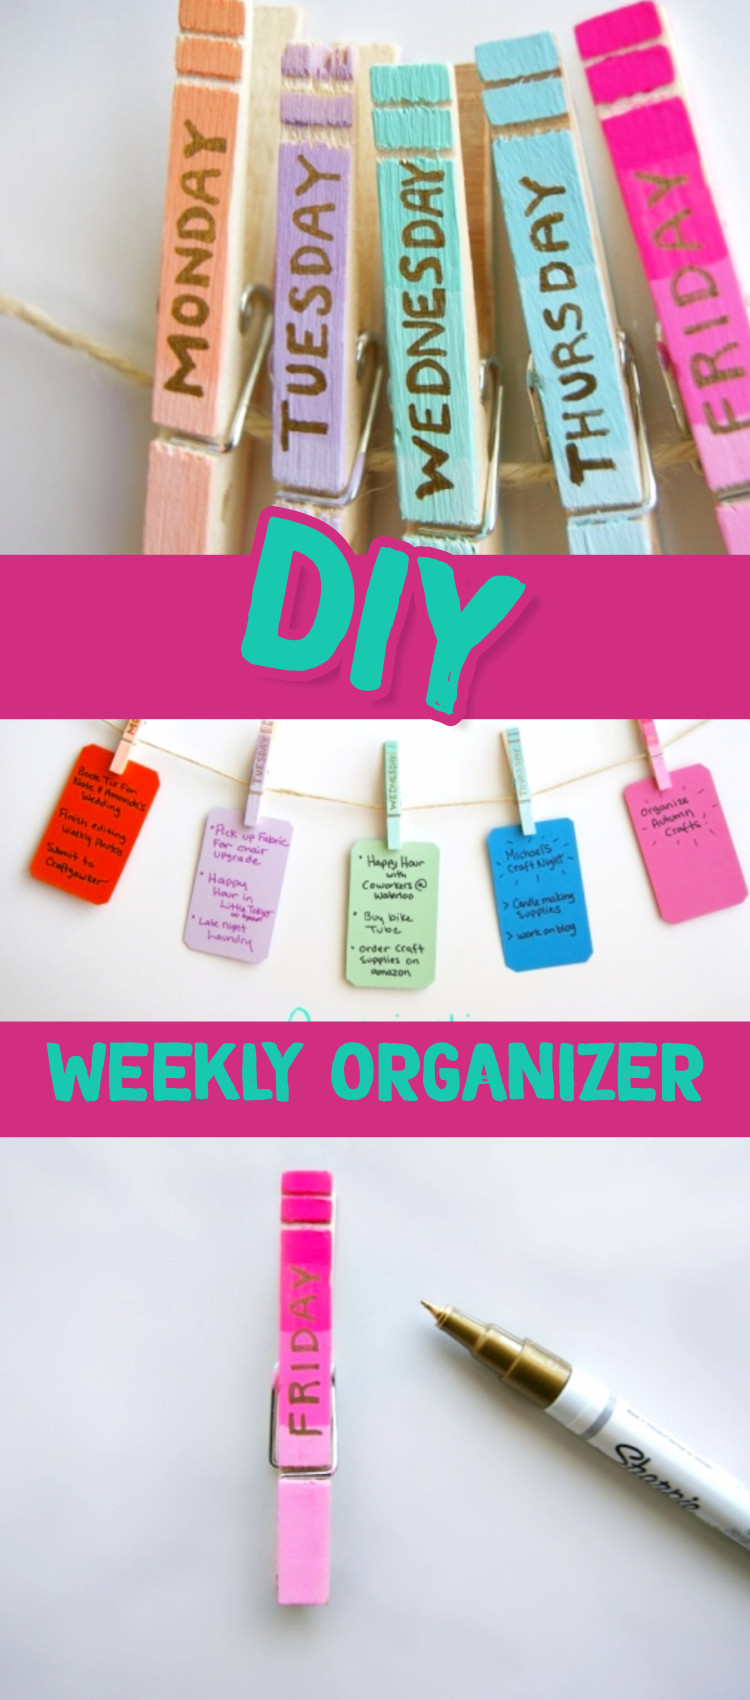 Dorm room ideas - DIY college dorm room organizing and decorating ideas - creative dorm room hacks